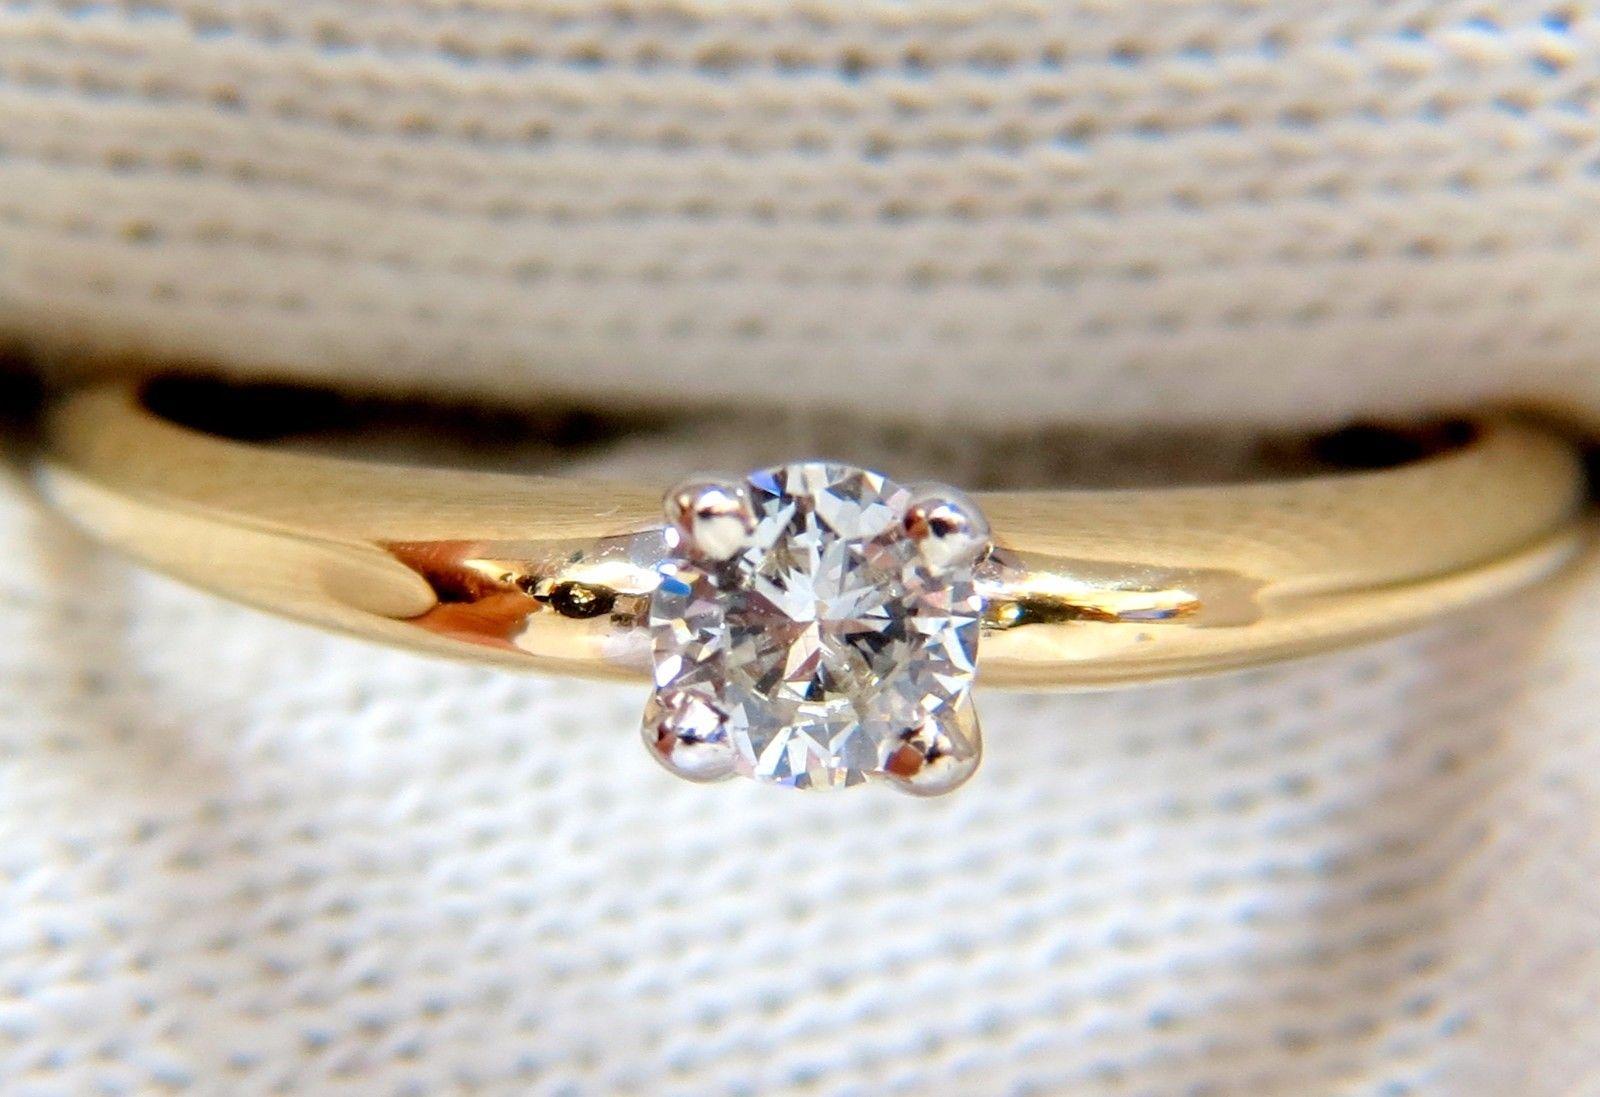 .25 carat diamond ring